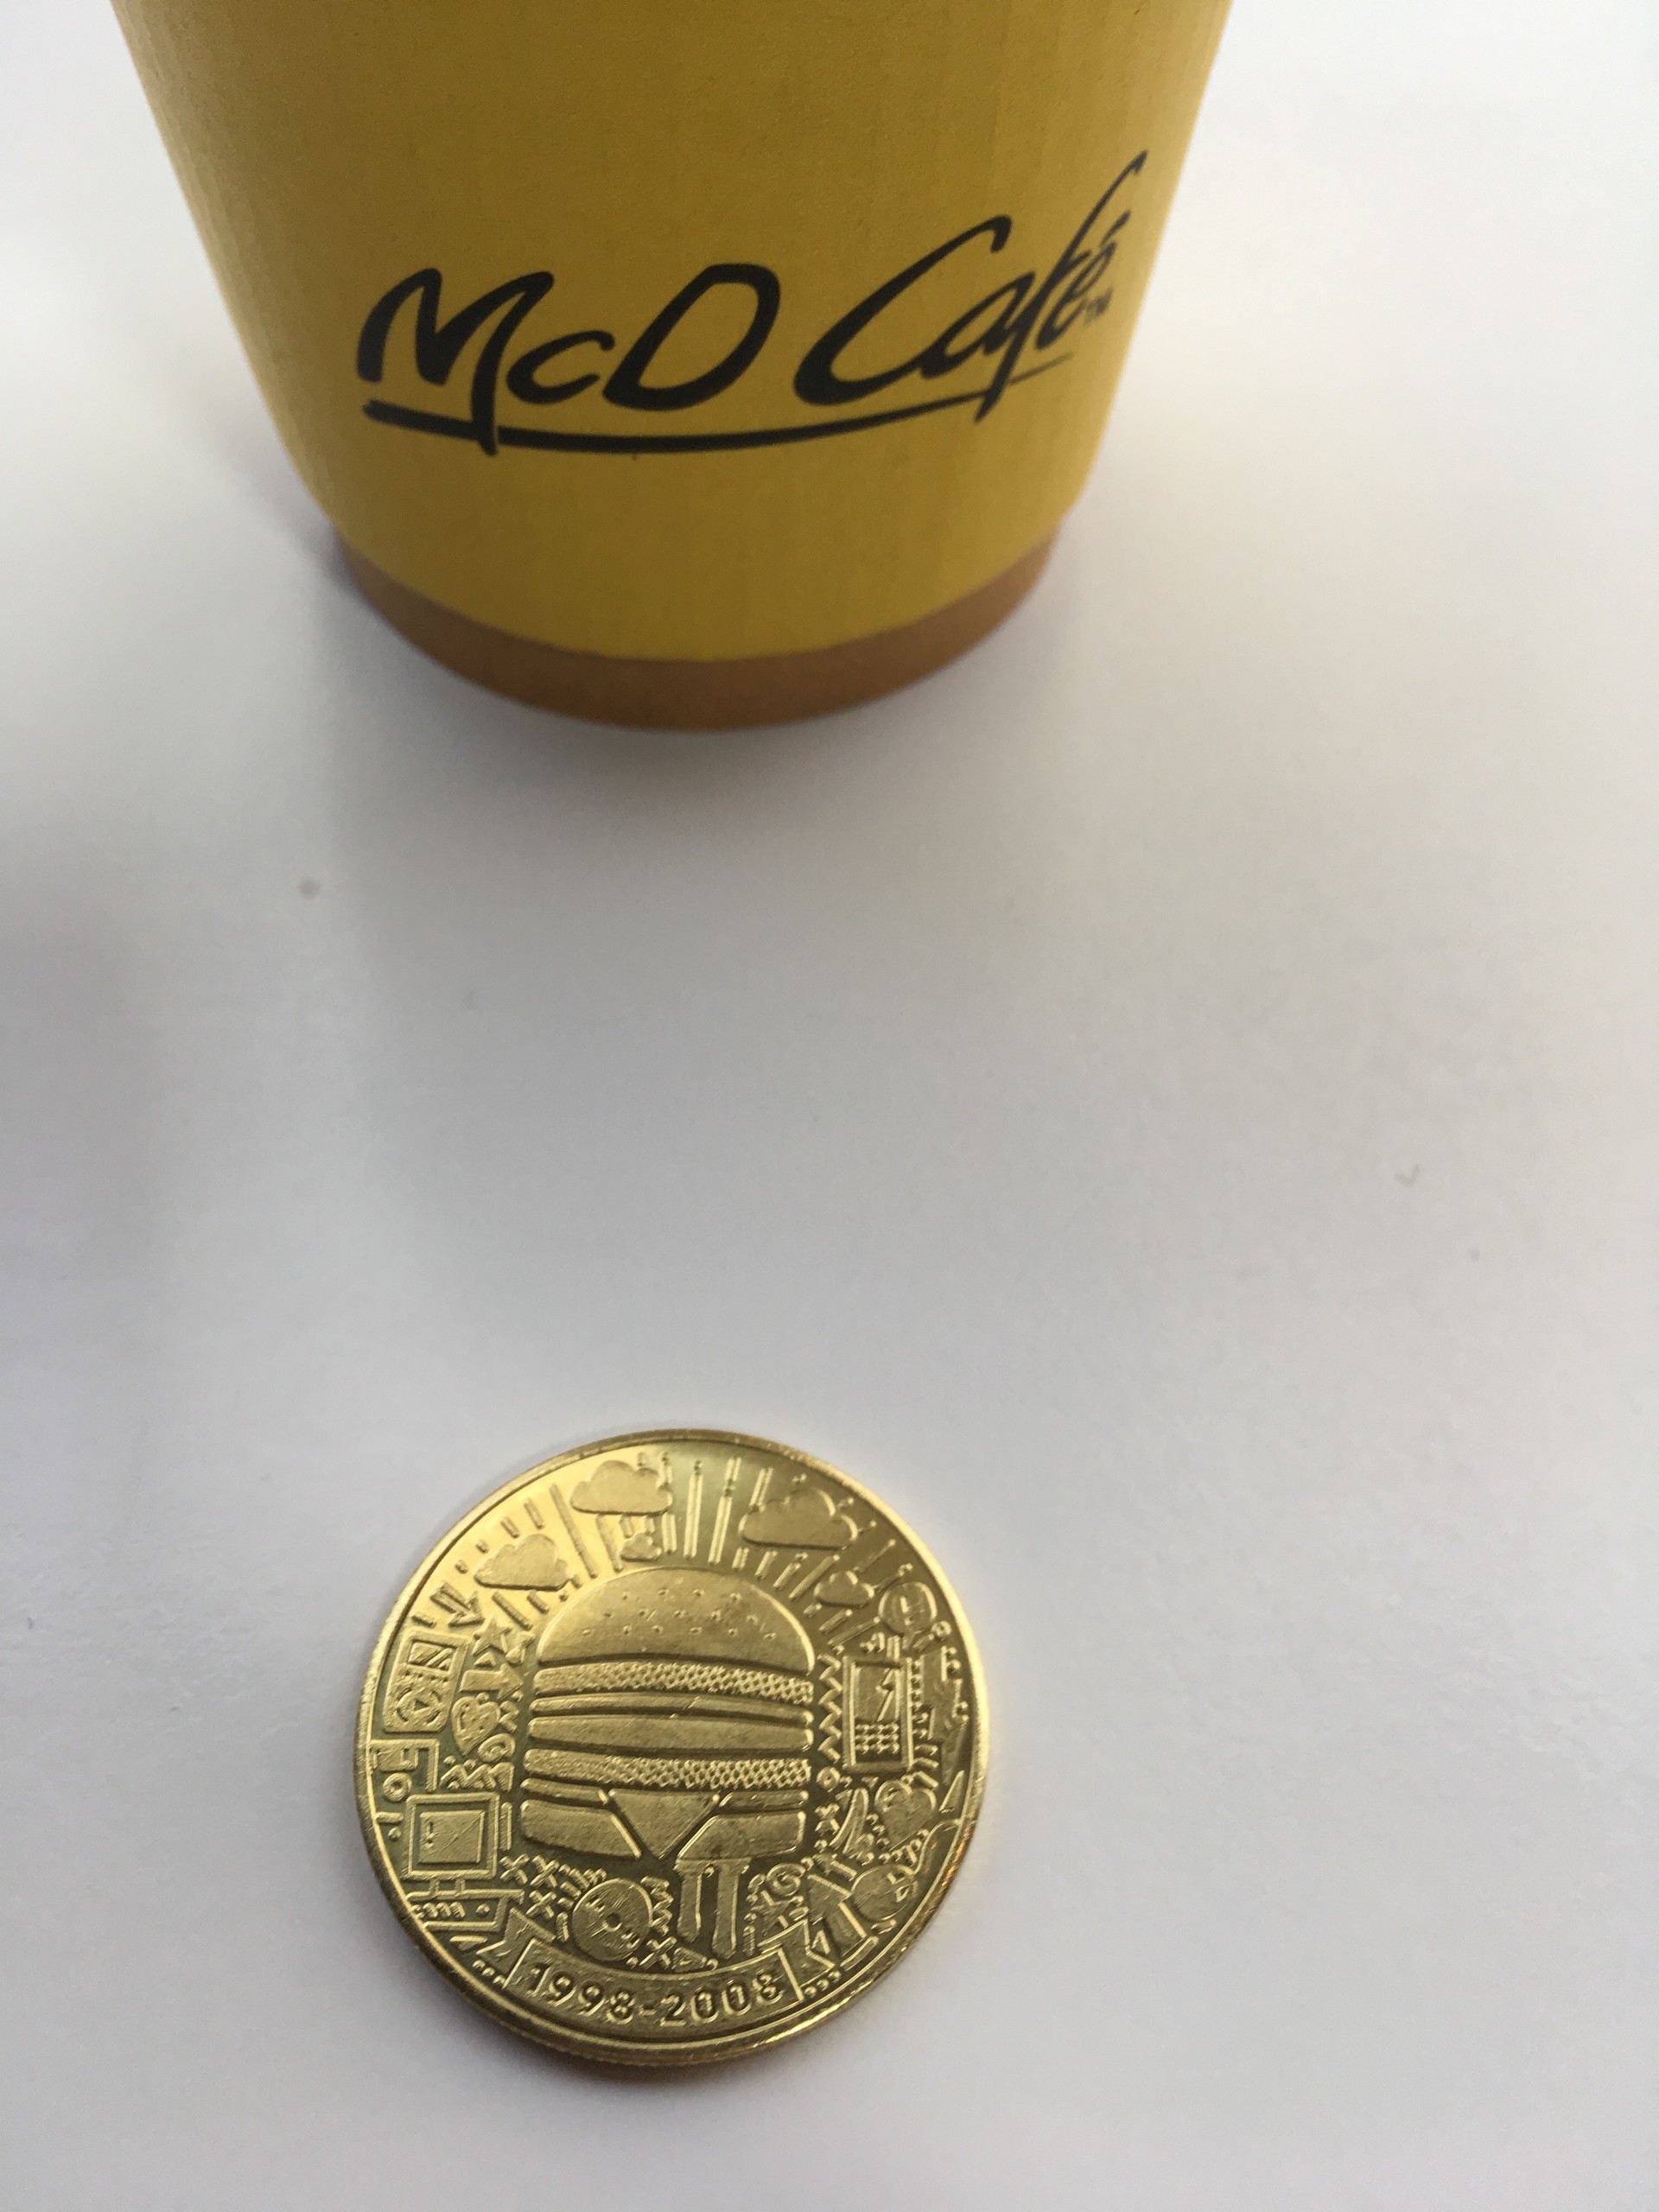 Big Mac Coin Fırsatı (Fiziksel Para) Ss&#8217;li